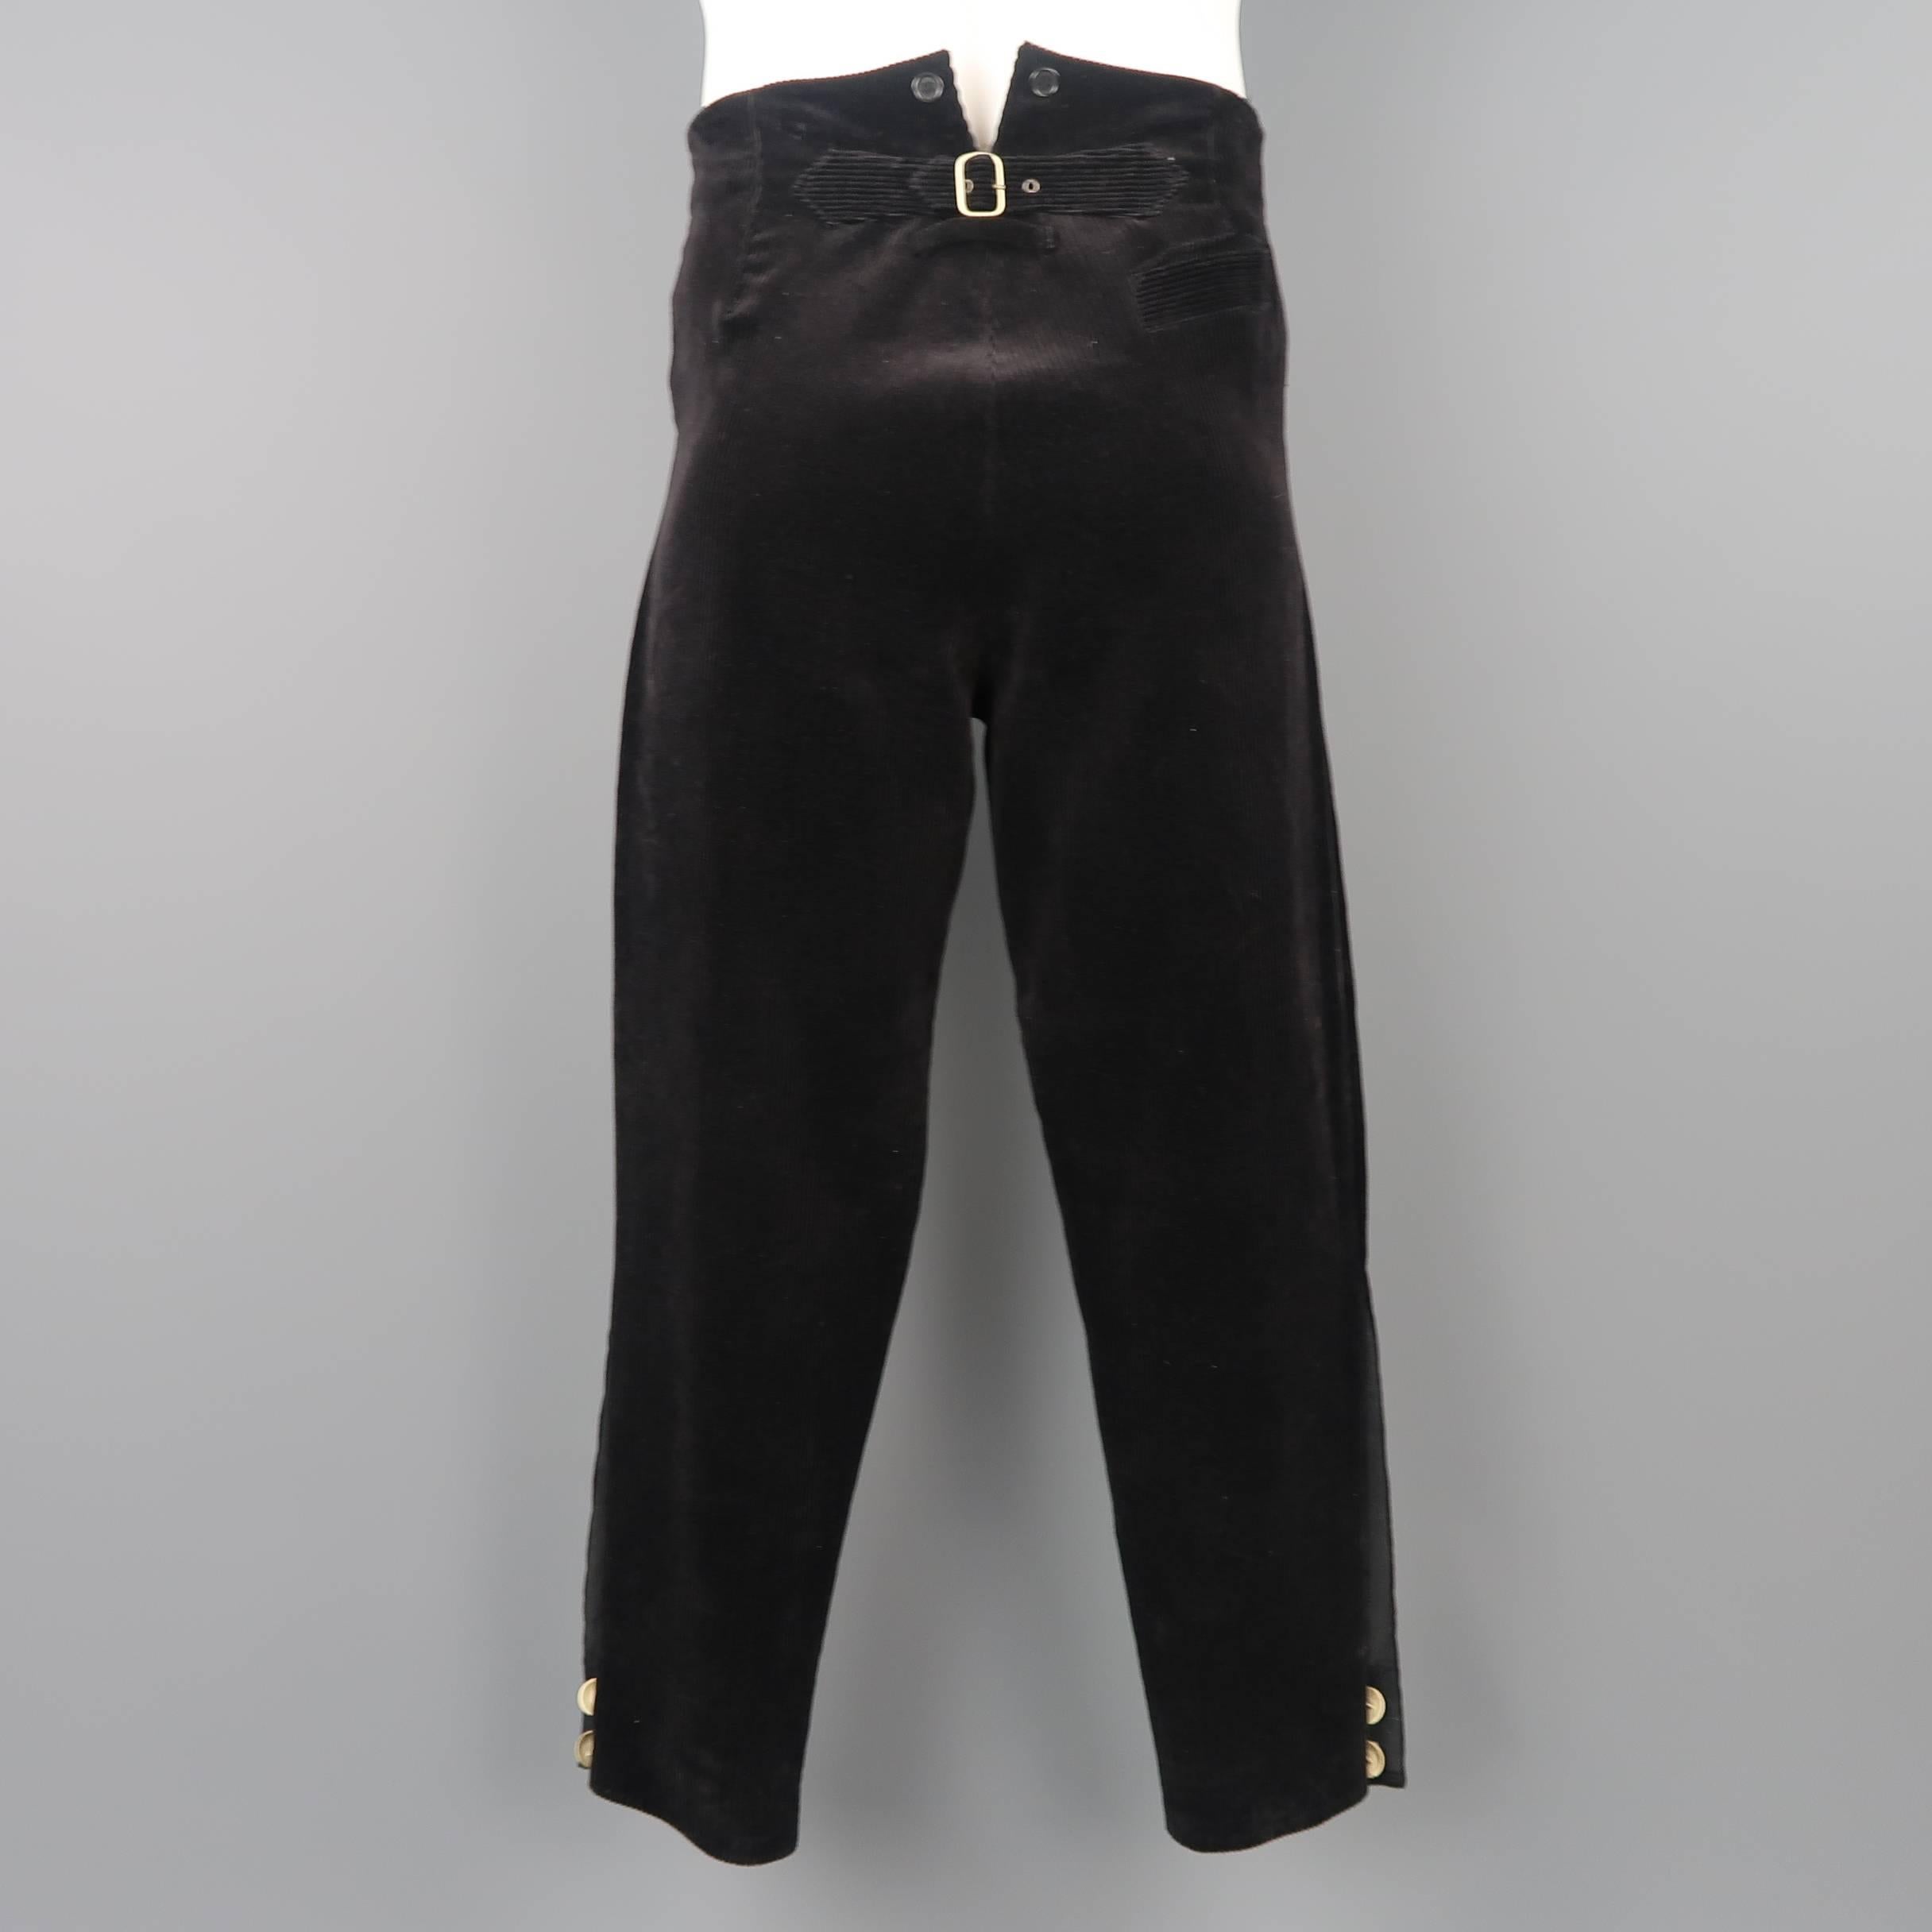 Jean Paul Gaultier Men's Black Corduroy Bull Head Button Dress Pants 4